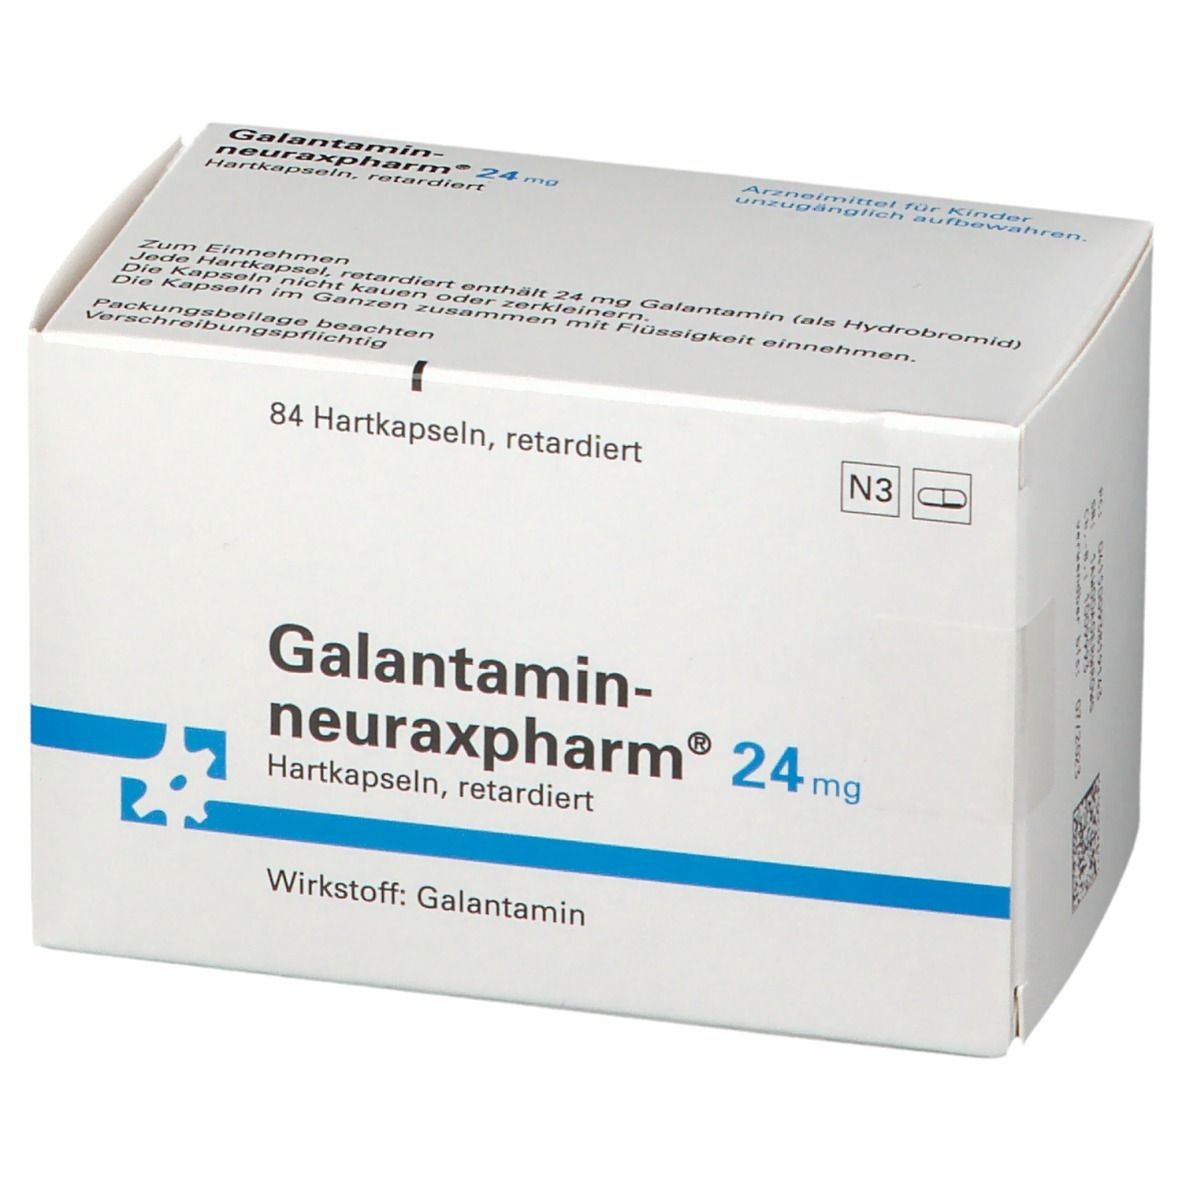 Galantamin-neuraxpharm® 24 mg